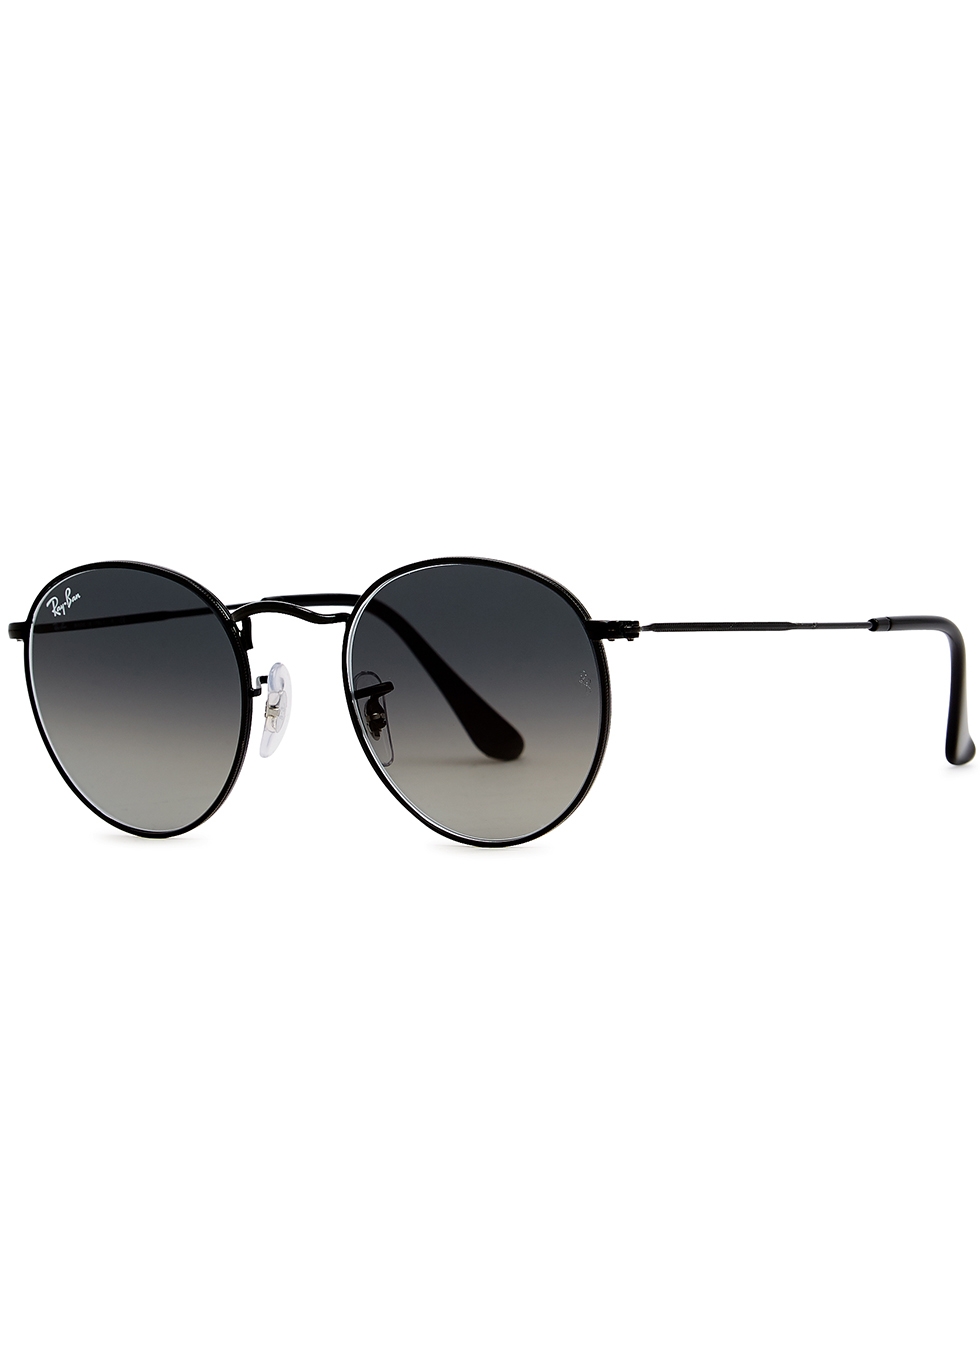 round black ray ban sunglasses